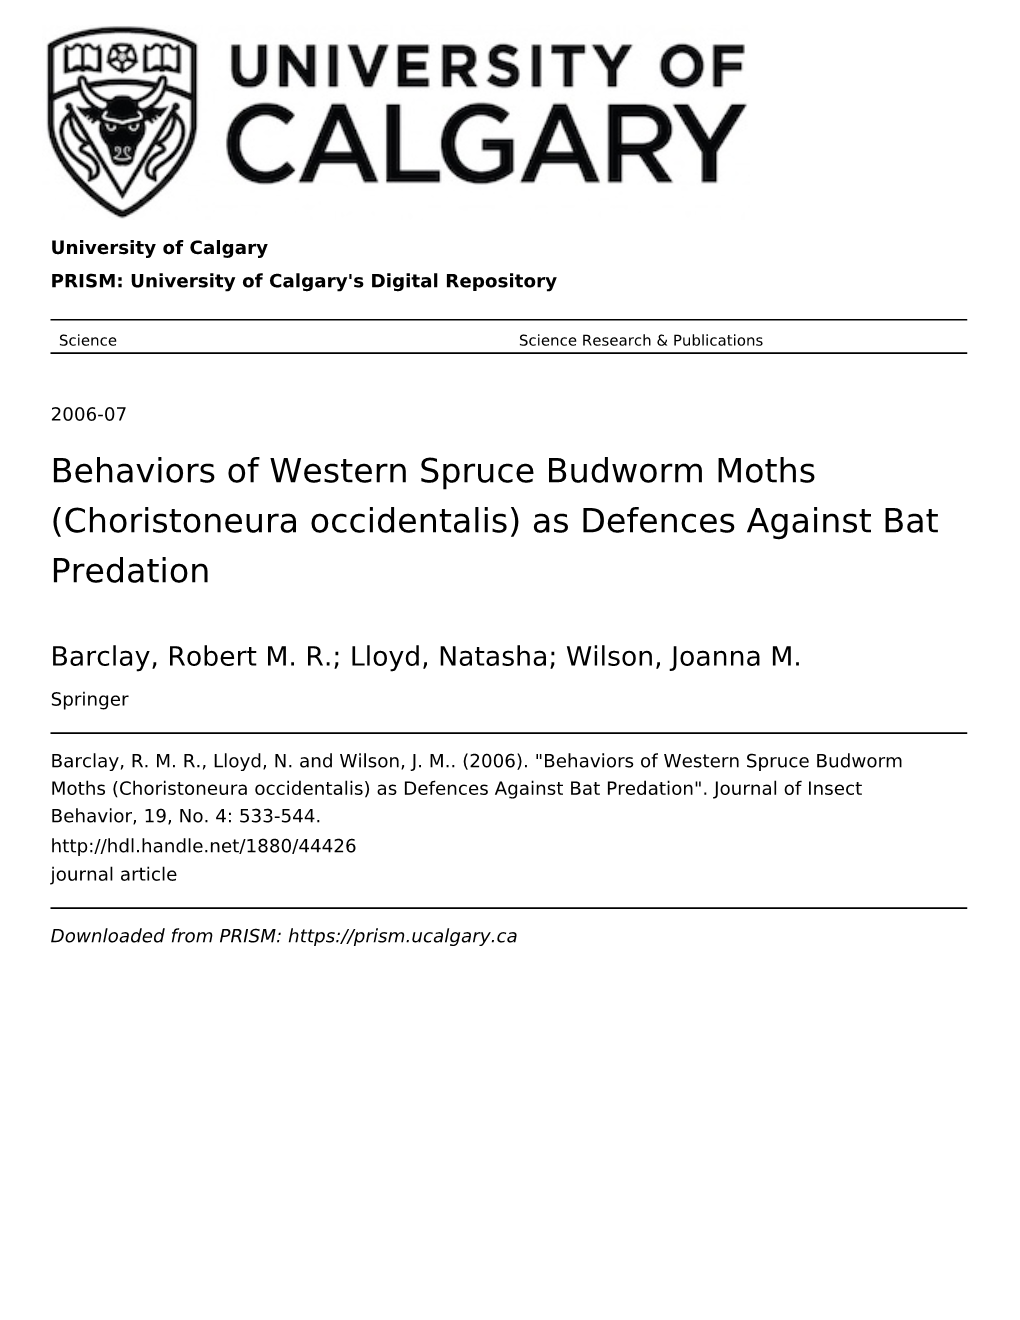 Behaviors of Western Spruce Budworm Moths (Choristoneura Occidentalis) As Defences Against Bat Predation